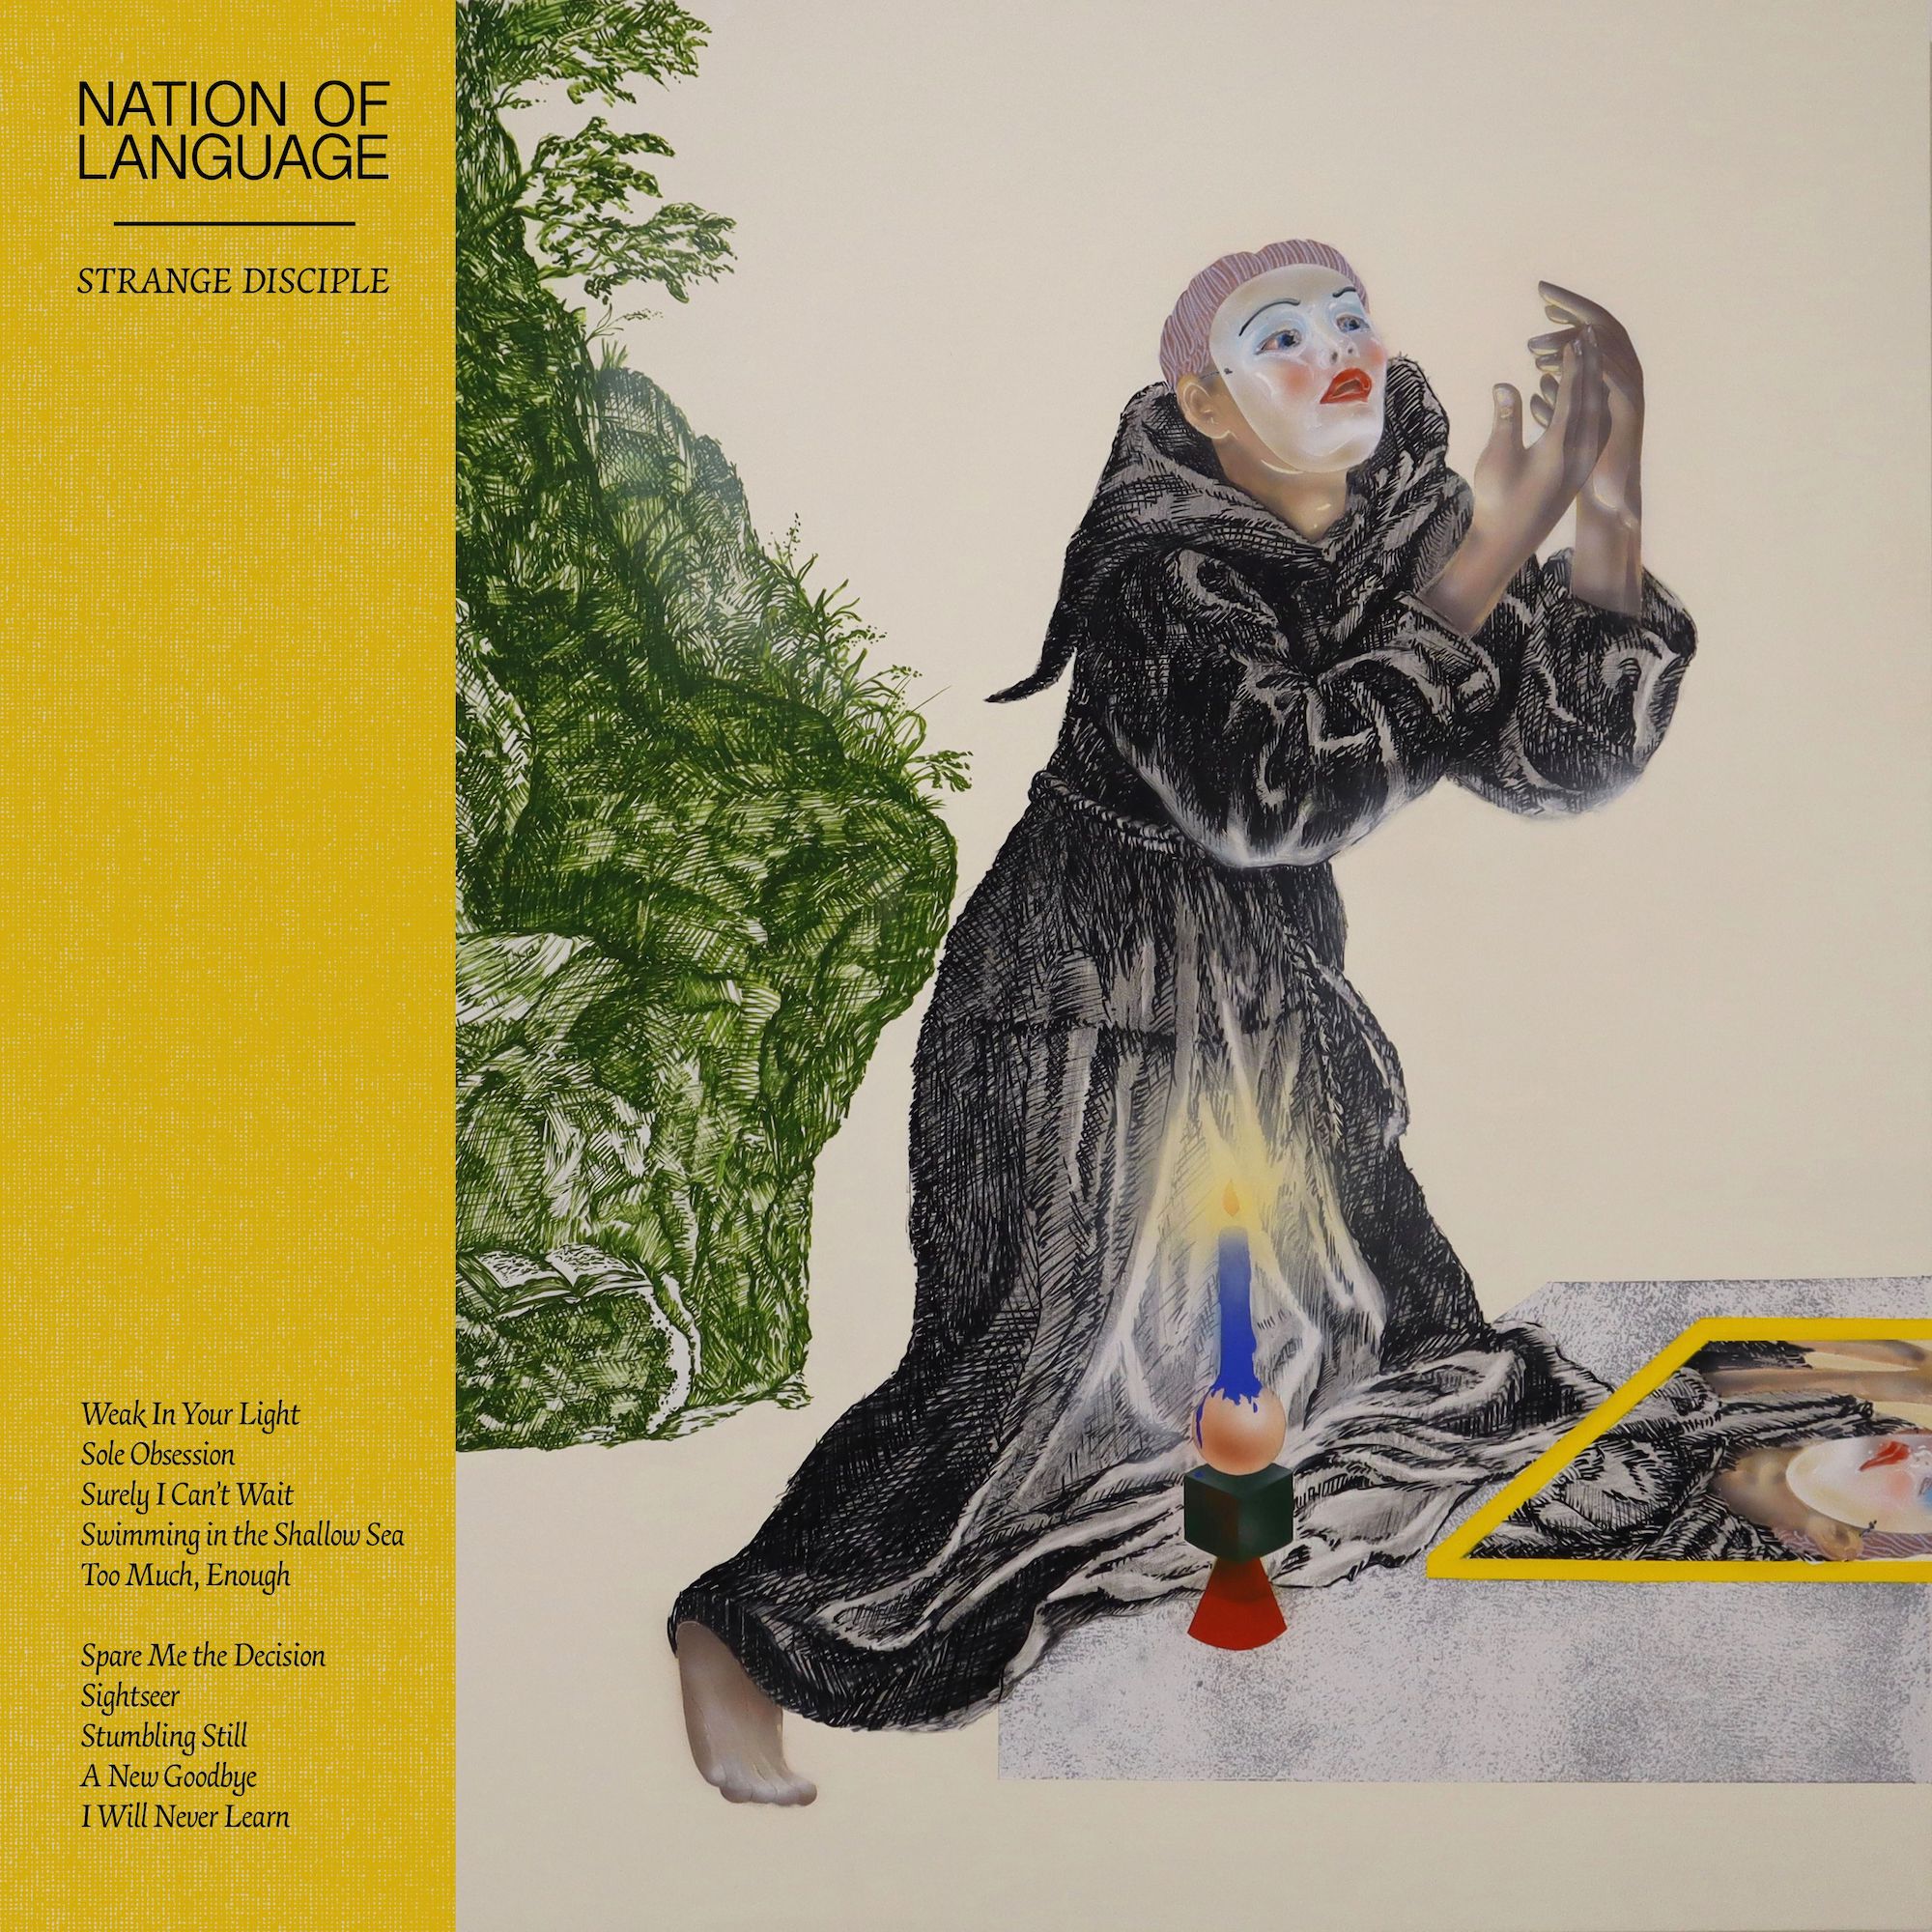 Nation Of Language 'Strange Disciple' album artwork